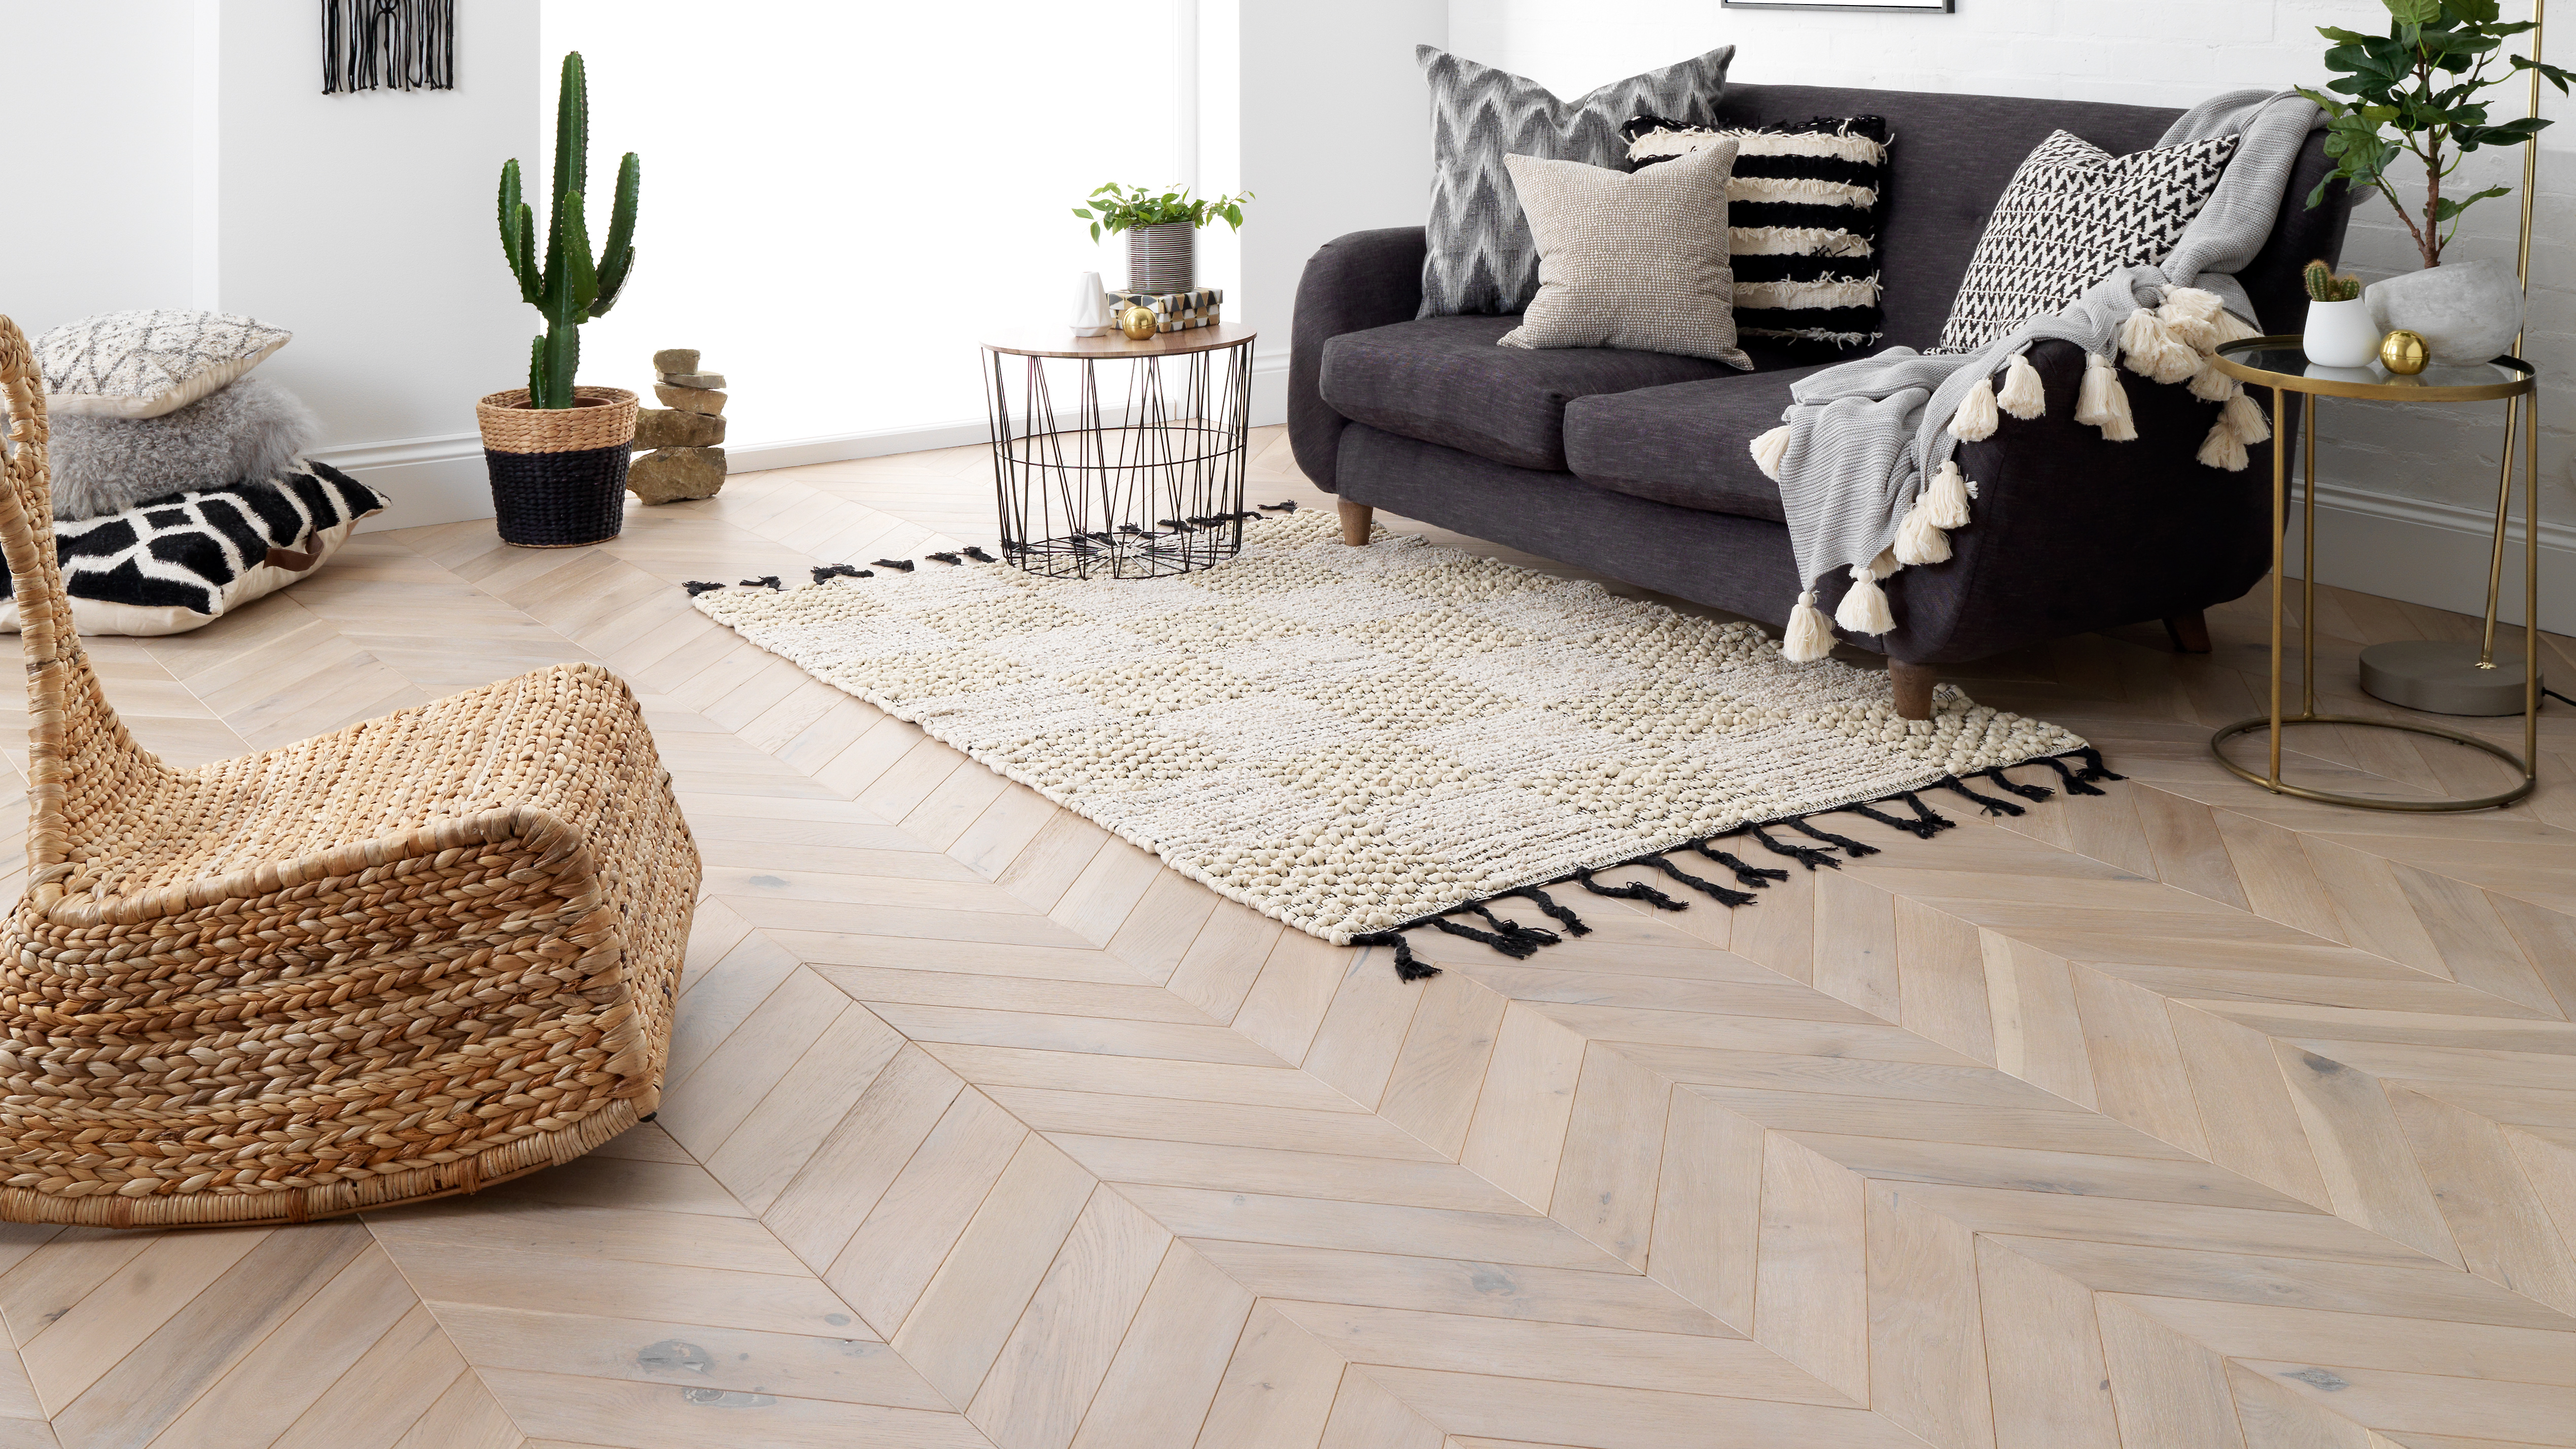 Wooden Flooring Hardwood, Which Is More Expensive Carpet Or Hardwood Floors